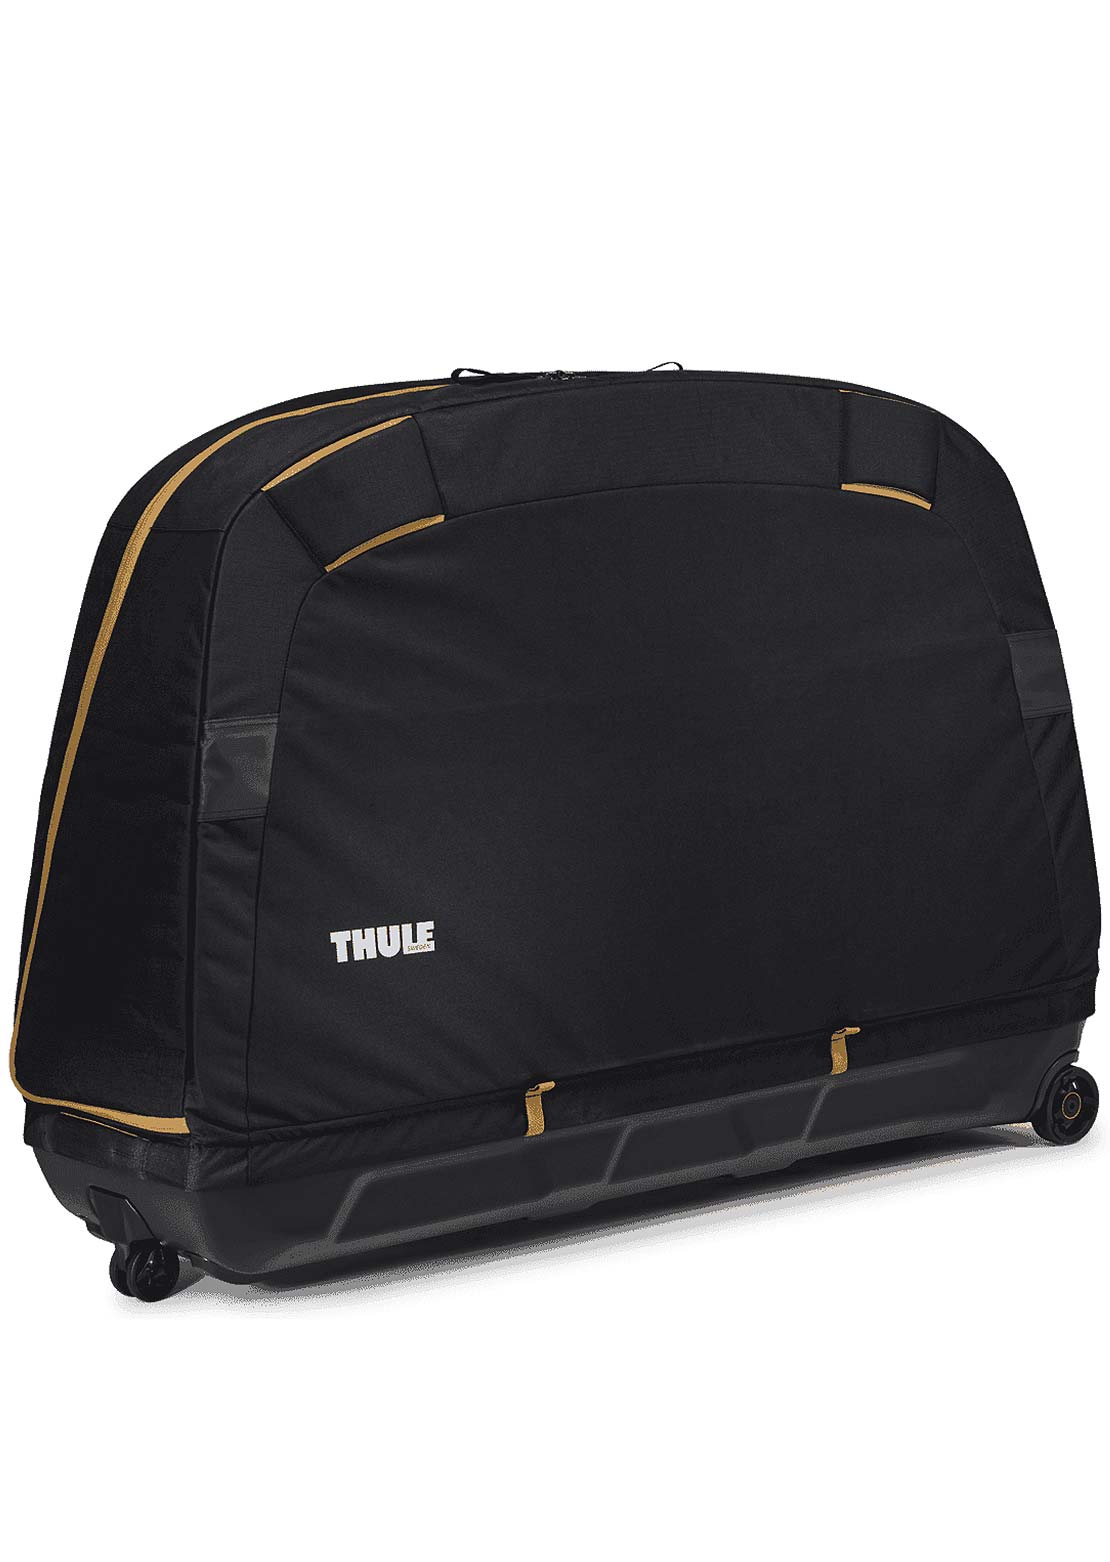 Thule Roundtrip Road Bike Travel Luggage Black